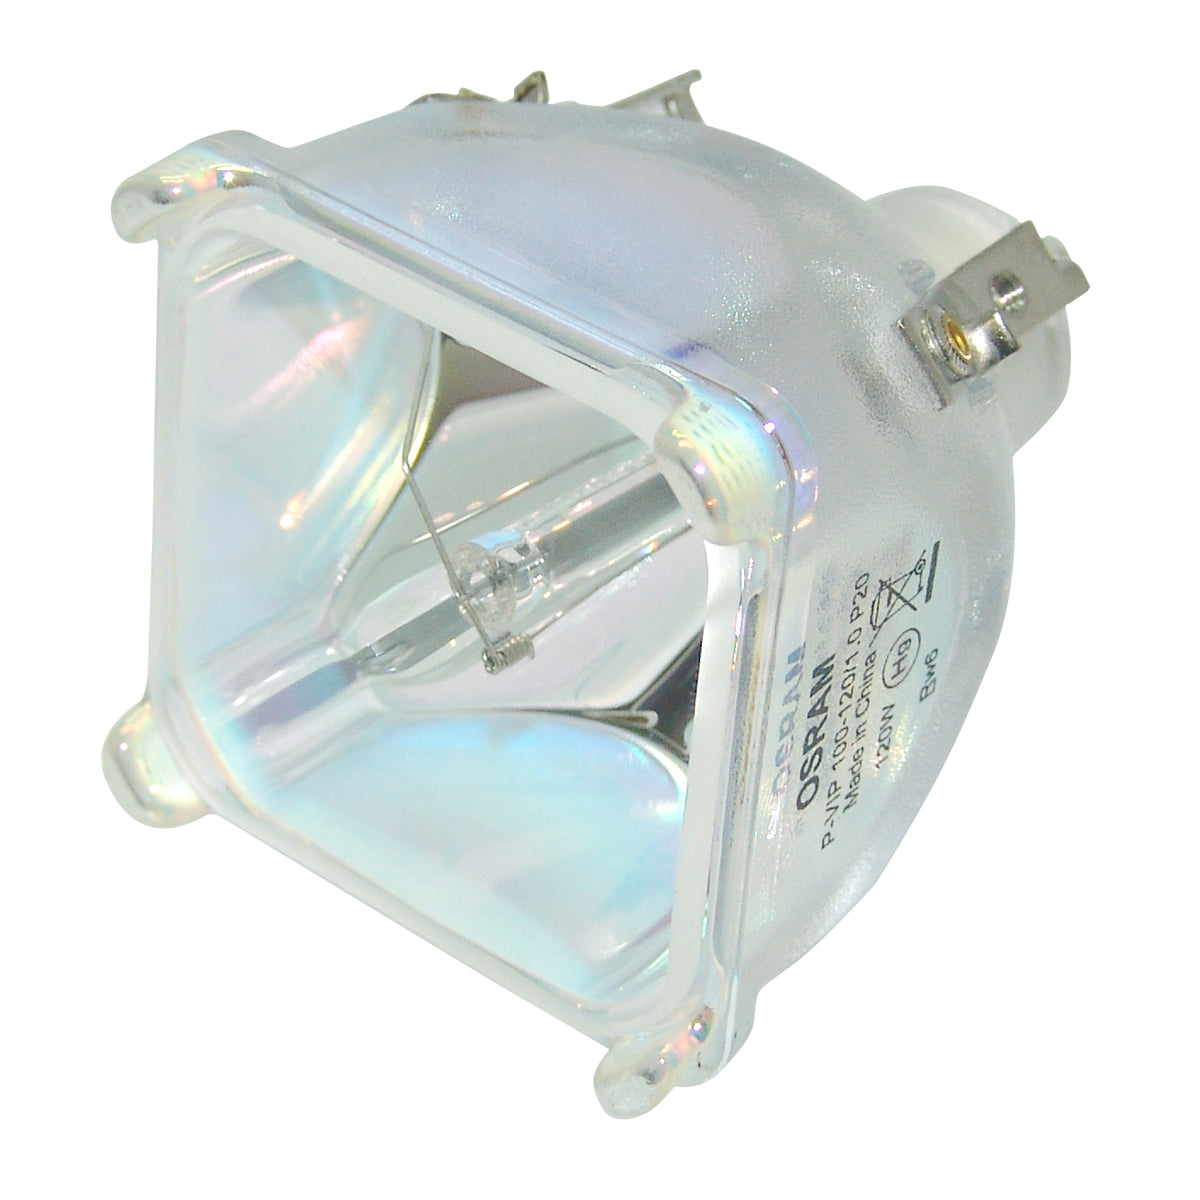 3M 78-6969-9205-2 Osram Projector Bare Lamp